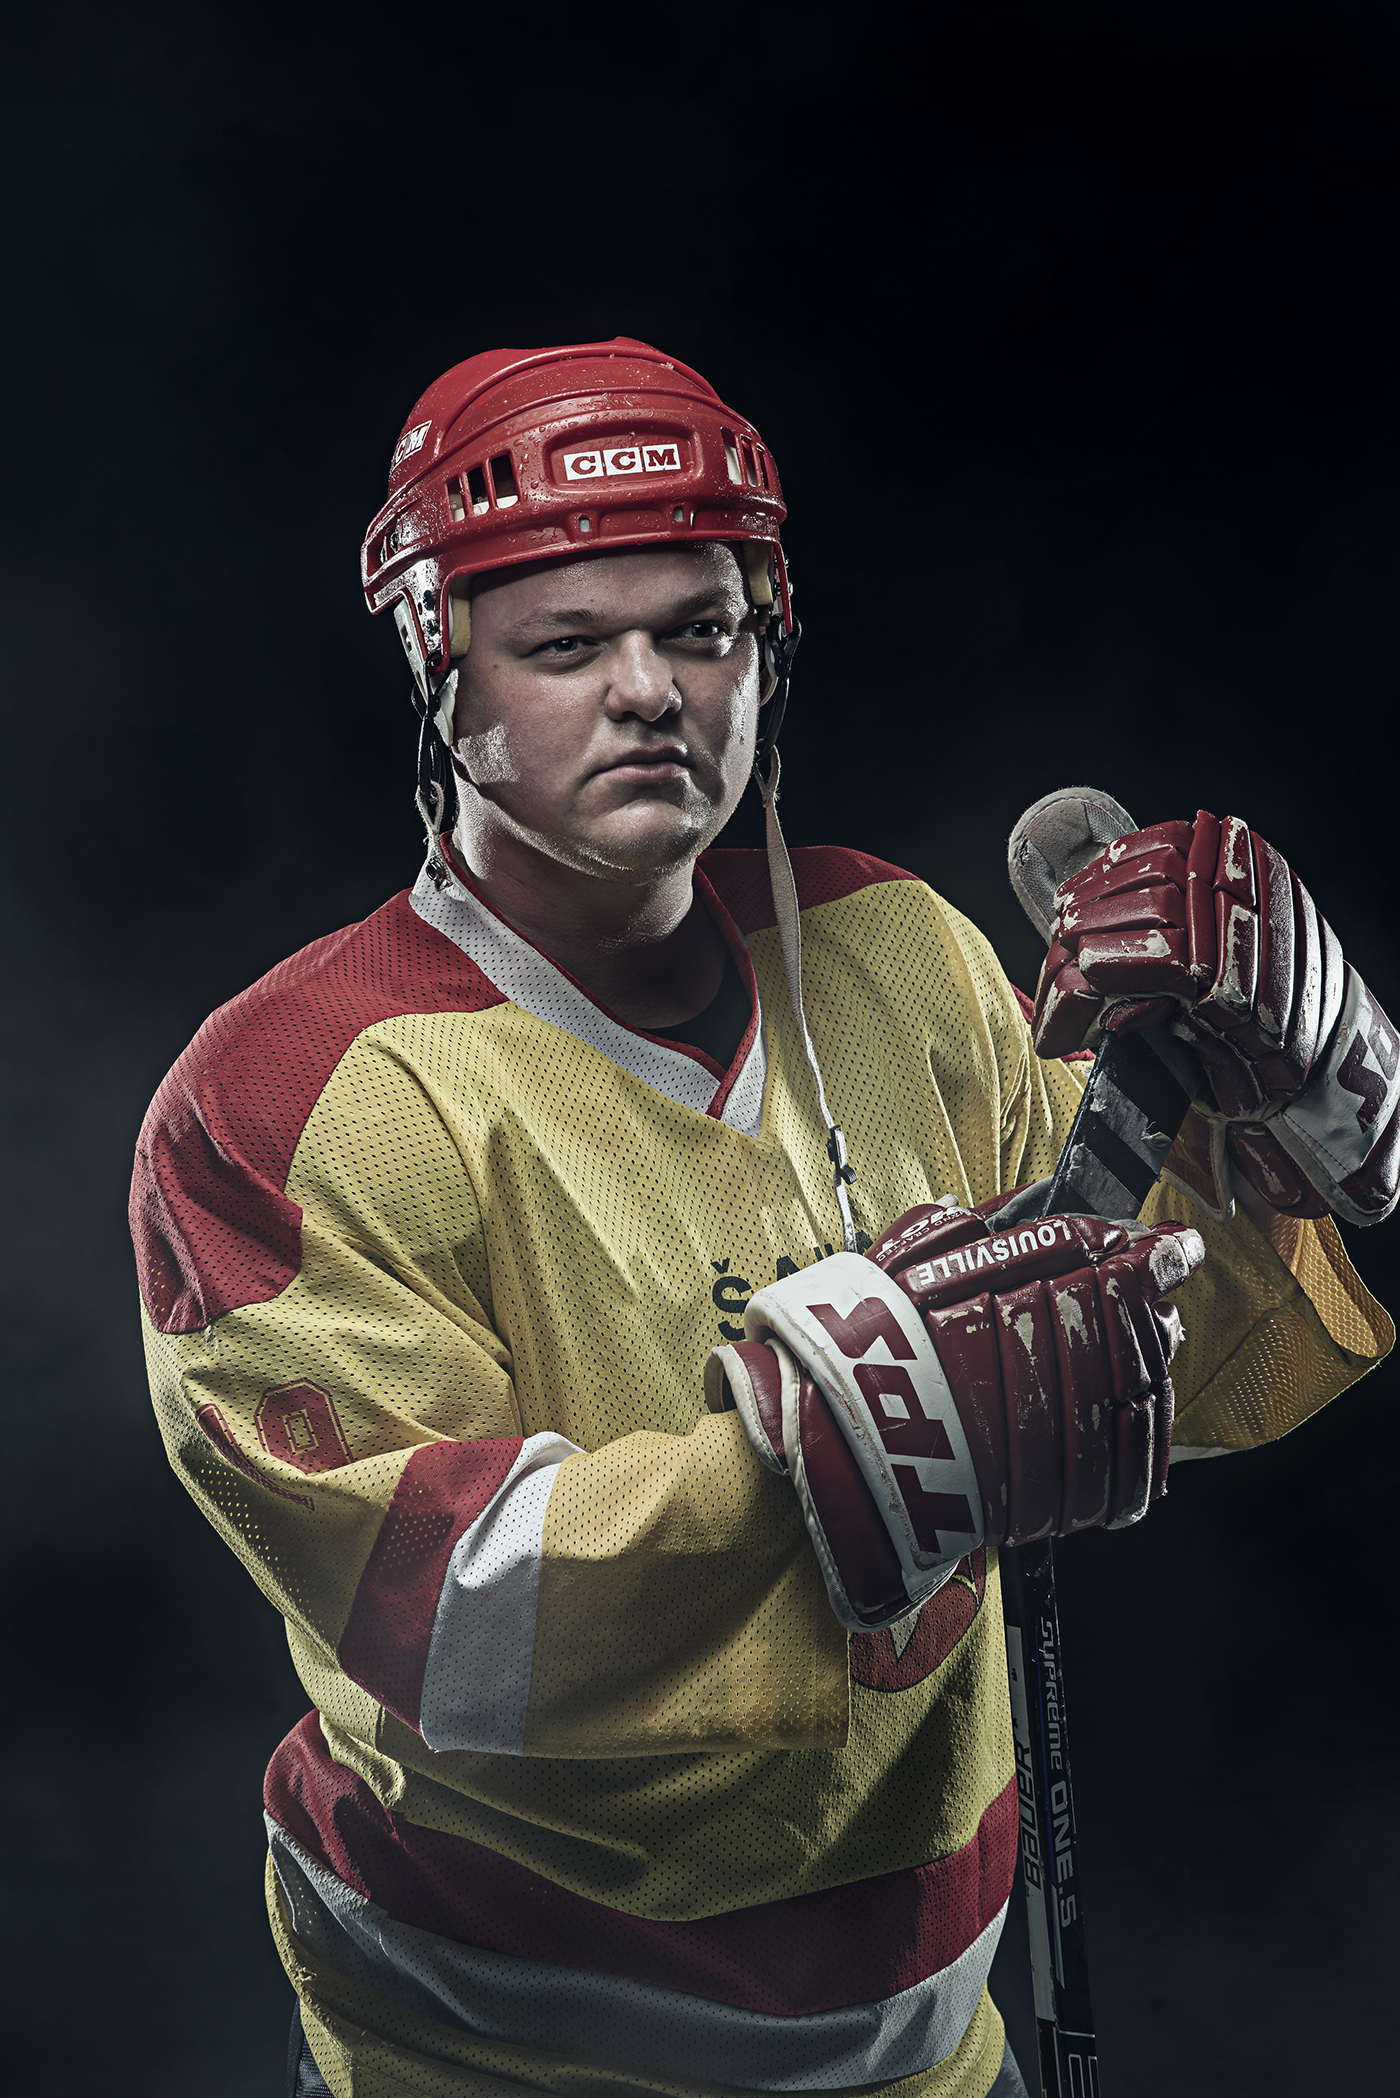 hockey Winter sports portraits